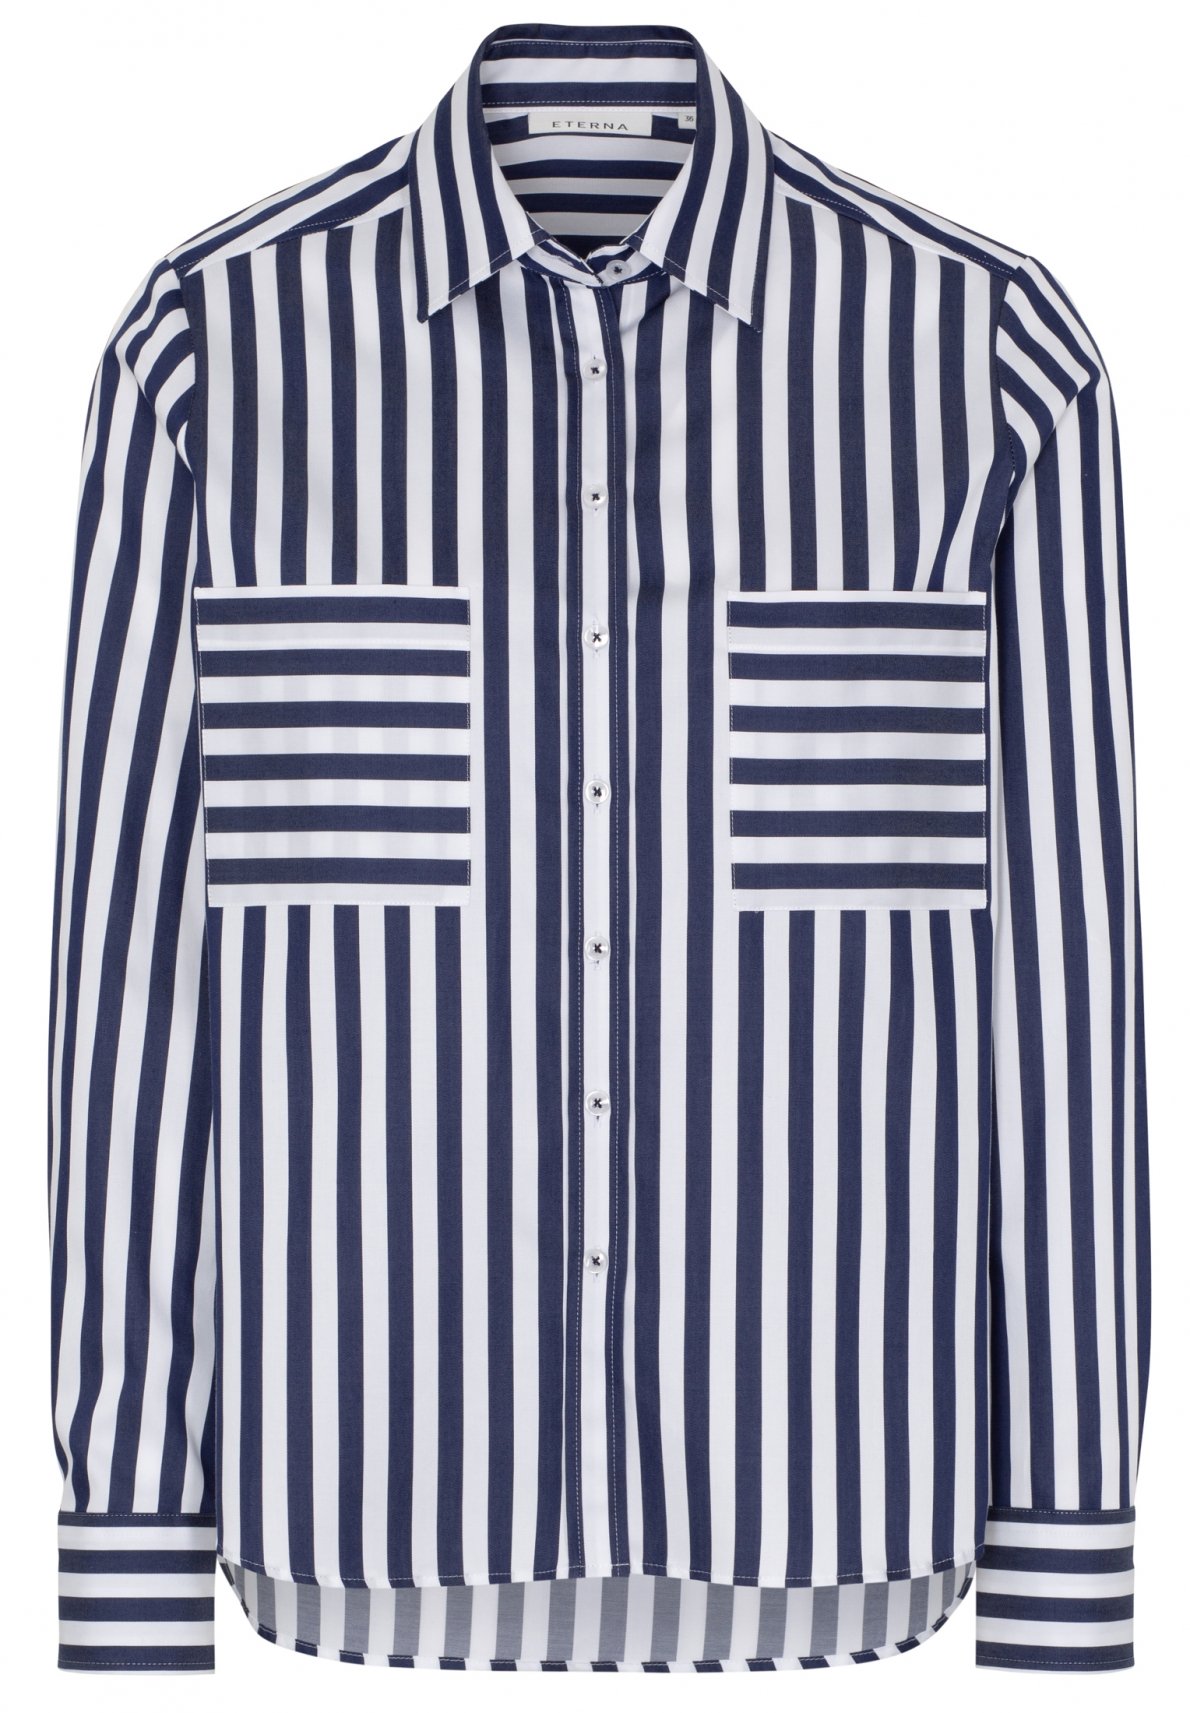 ETERNA MODERN CLASSIC Langarm Bluse dunkelblau-weiß gestreift 6285-19-D725  | Modern Fit | Eterna | Blusen | Damen Bekleidung | Jeans-Manufaktur